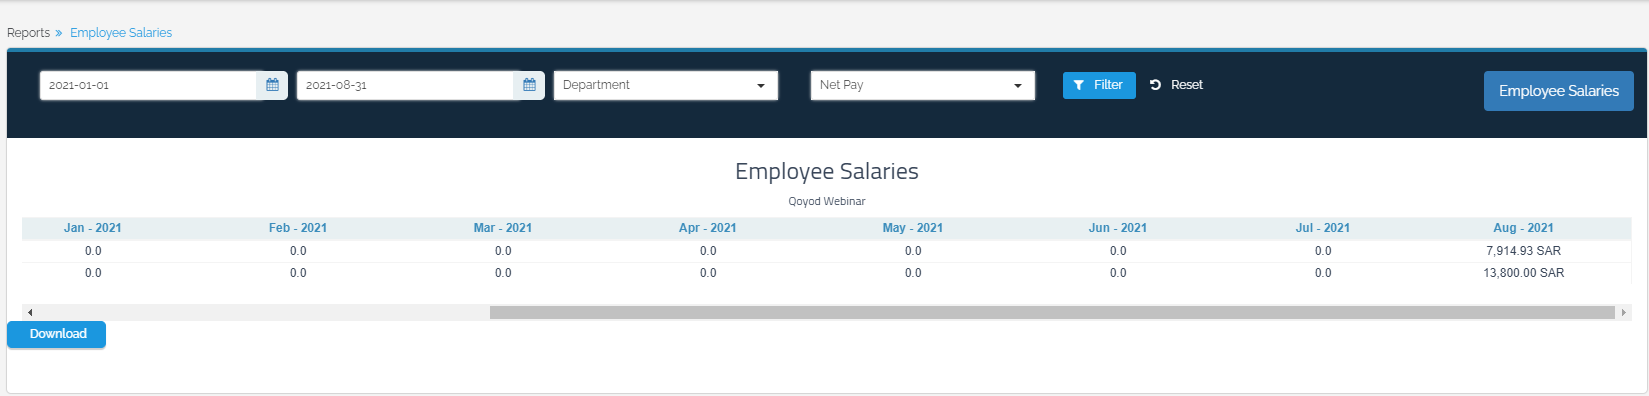 Employees Salary Report - Qoyod